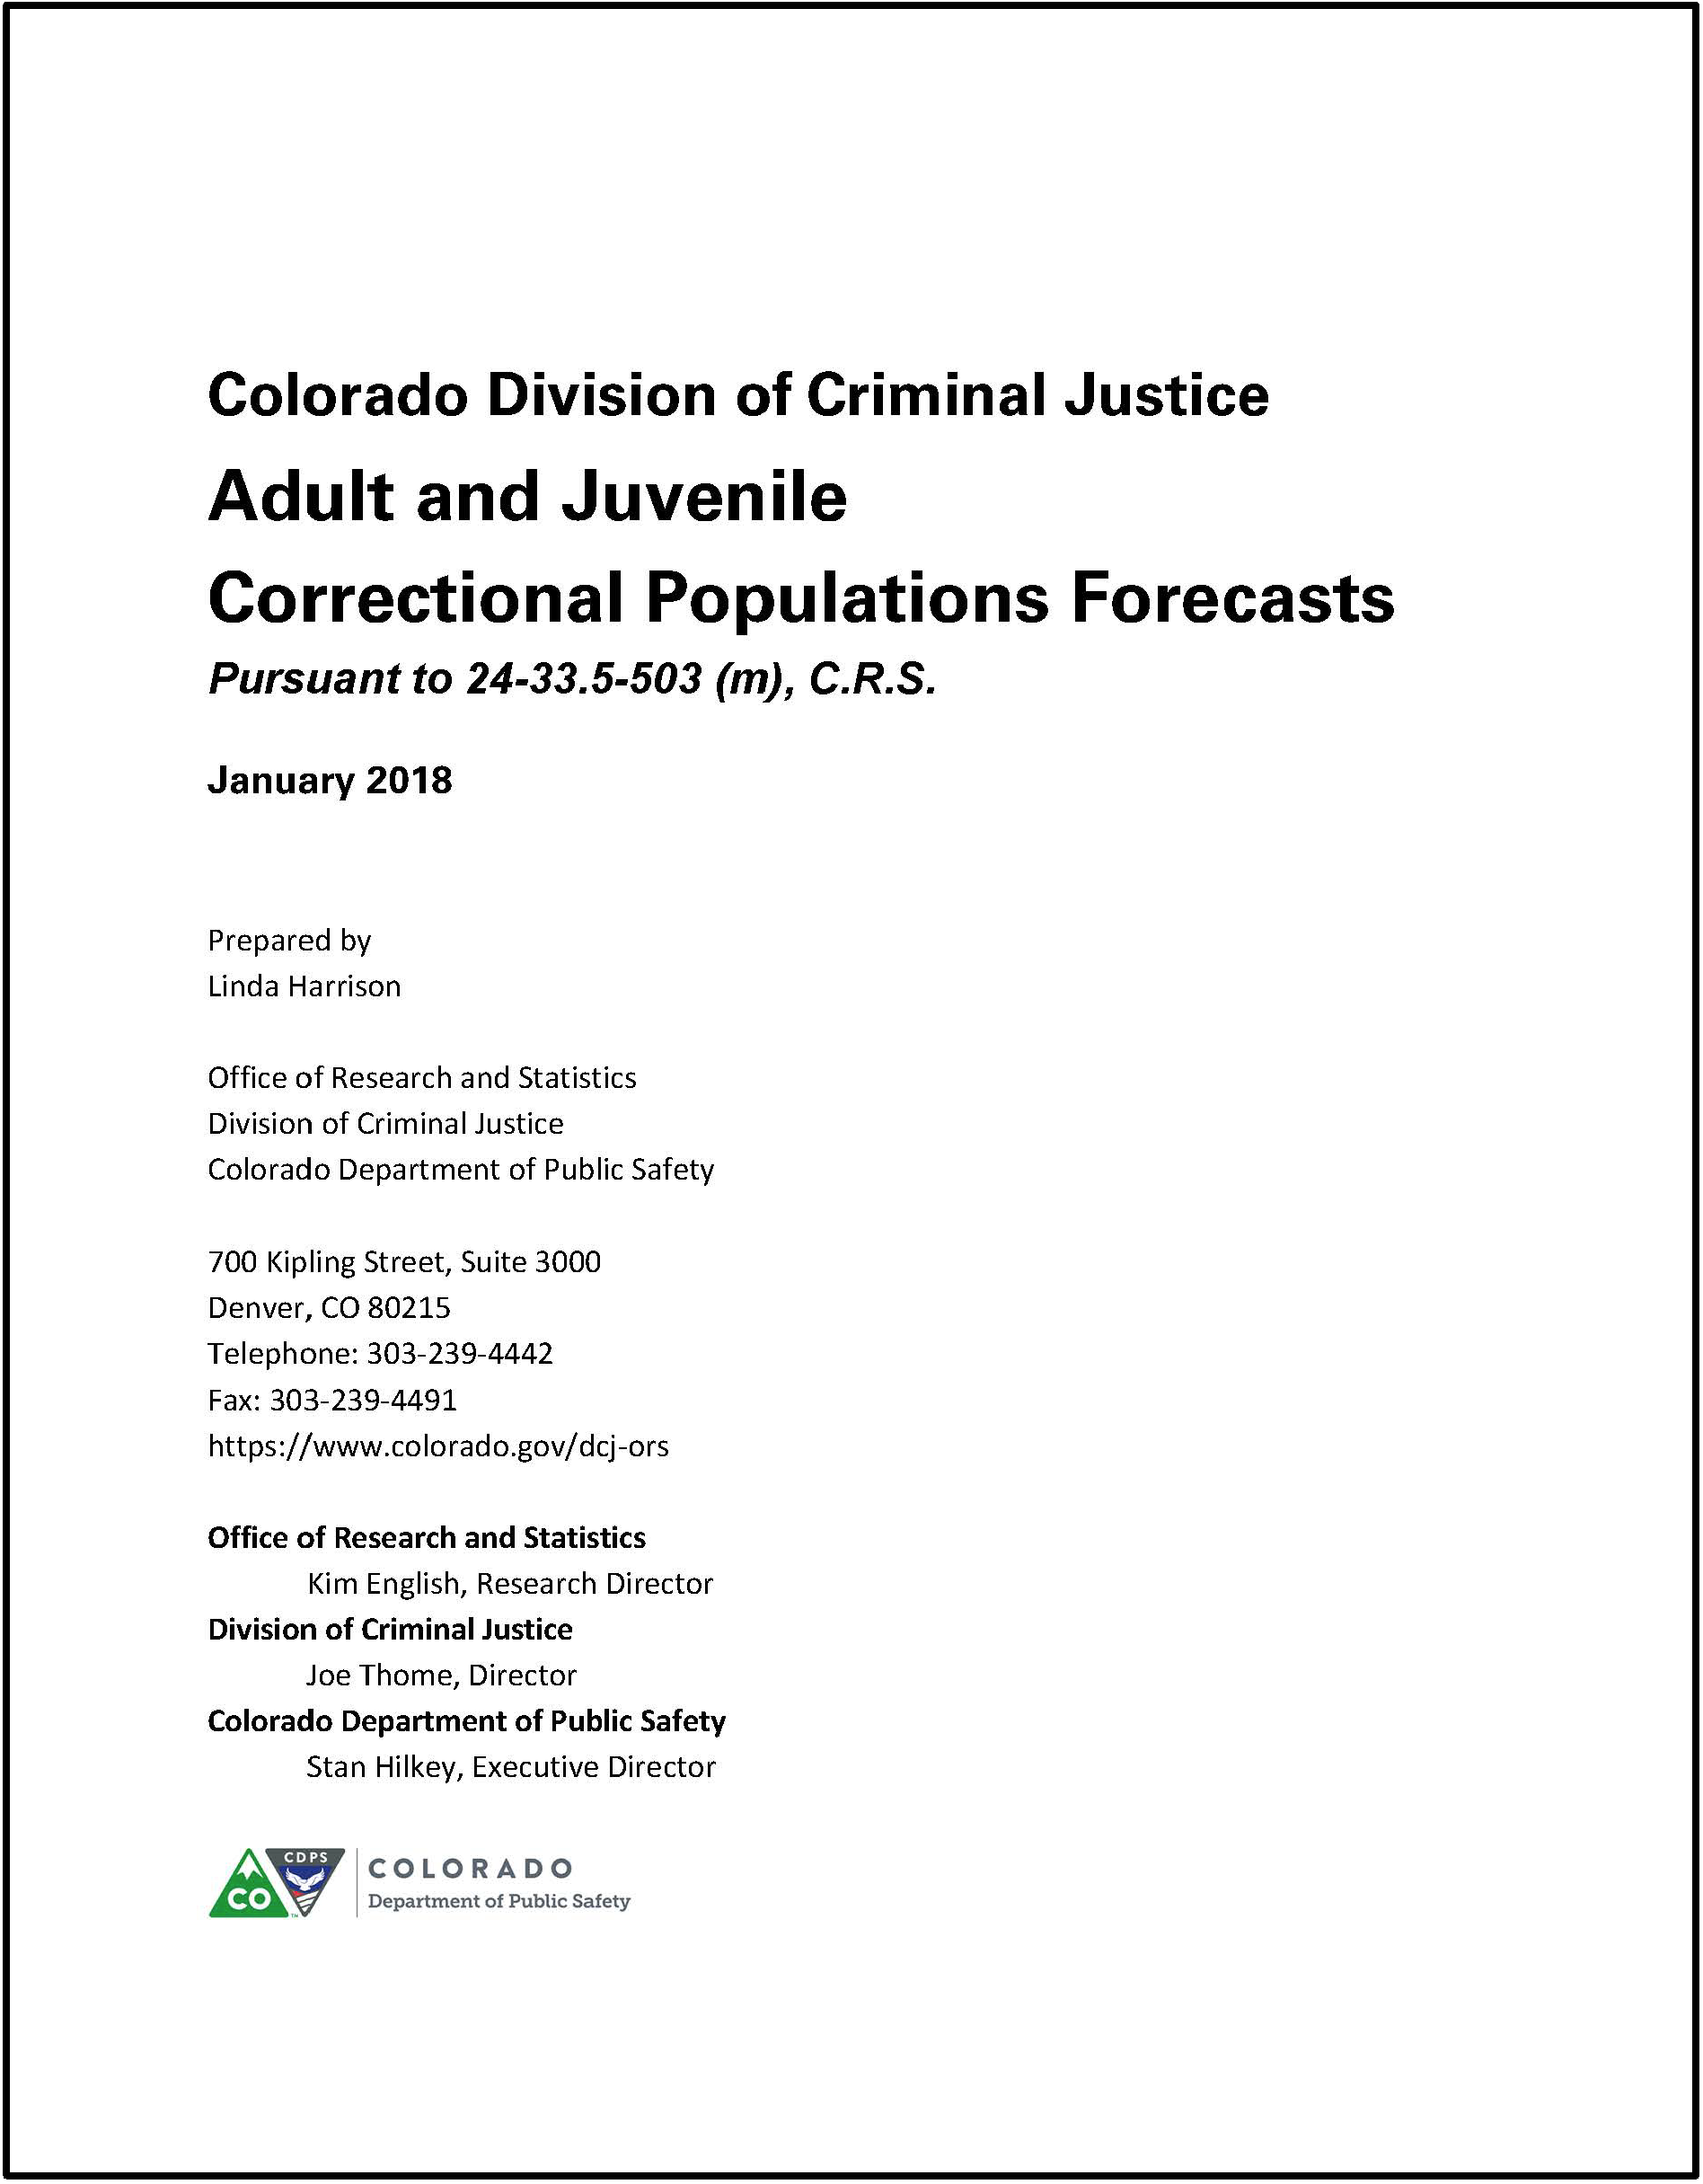 Correctional Population Forecasts, FY 2018 (January 2018)